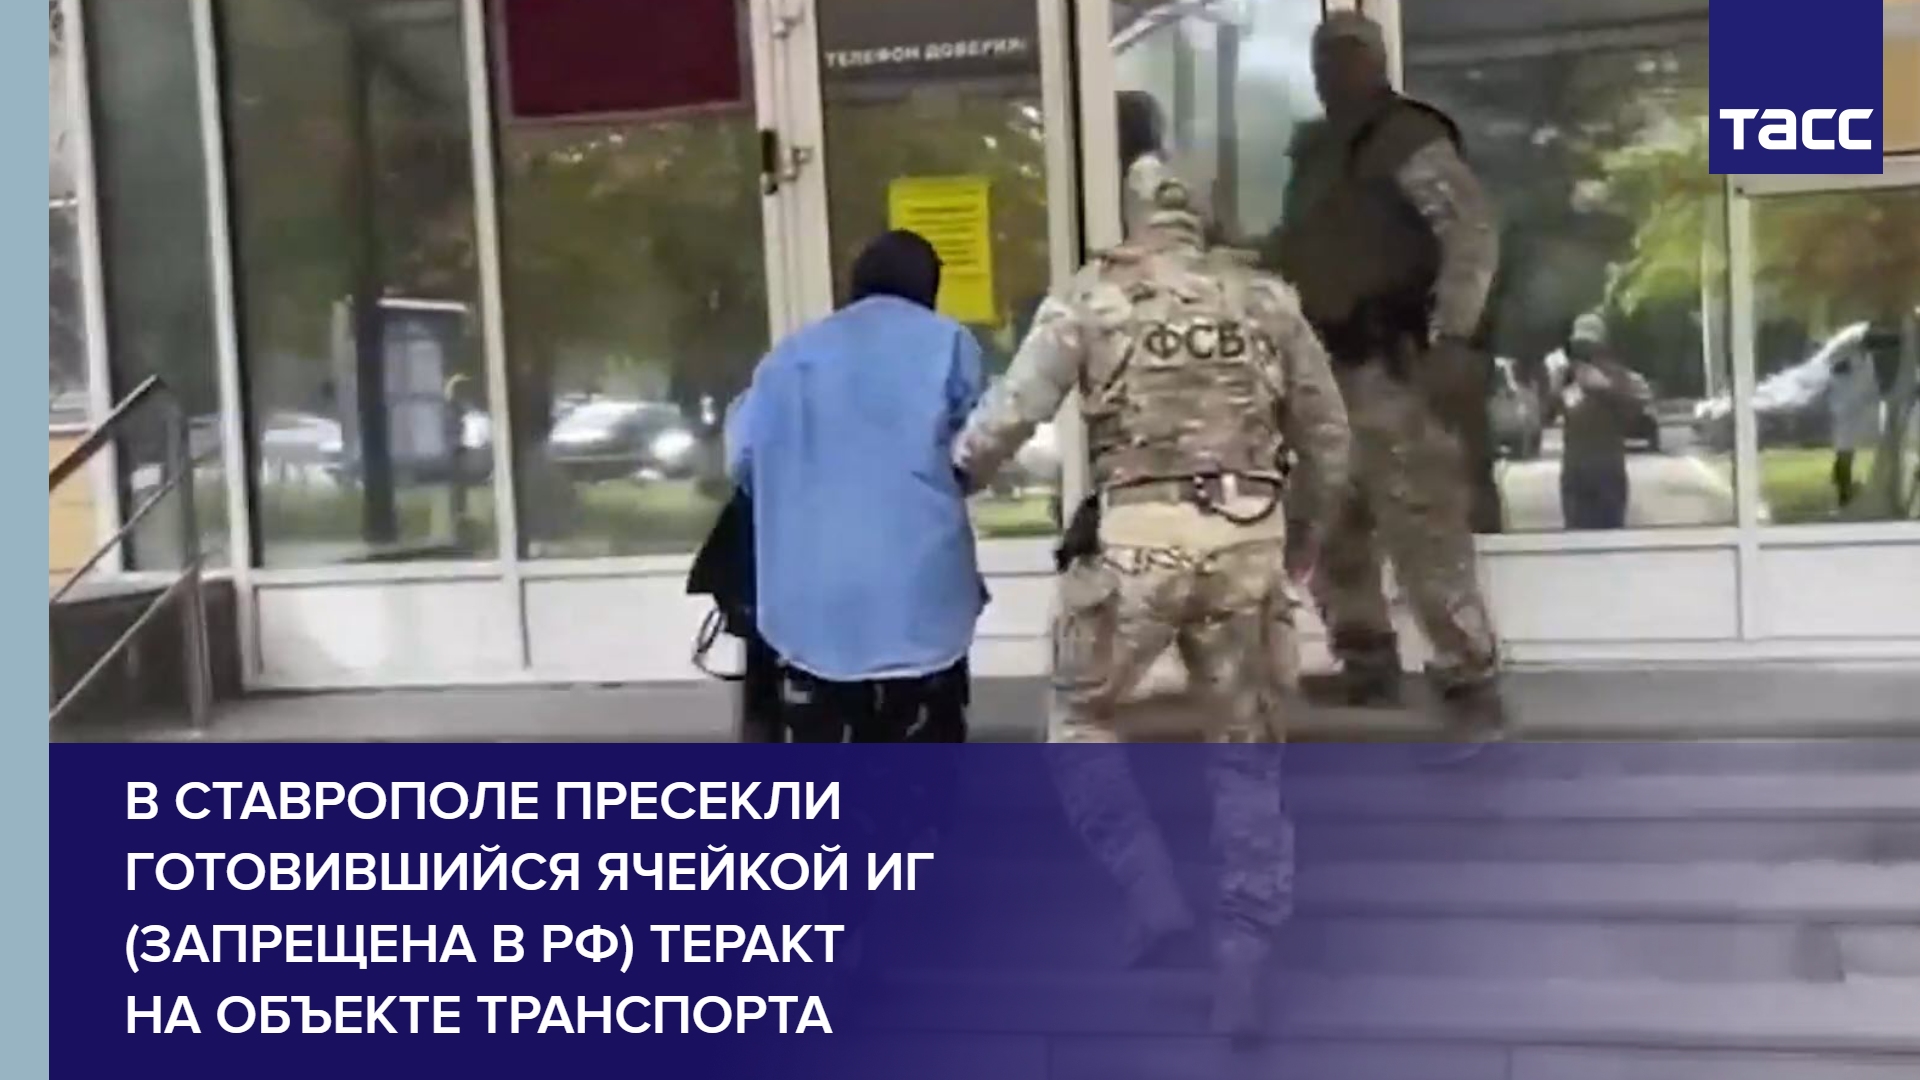 В Ставрополе пресекли готовившийся ячейкой ИГ (запрещена в РФ) теракт на объекте транспорта #shor